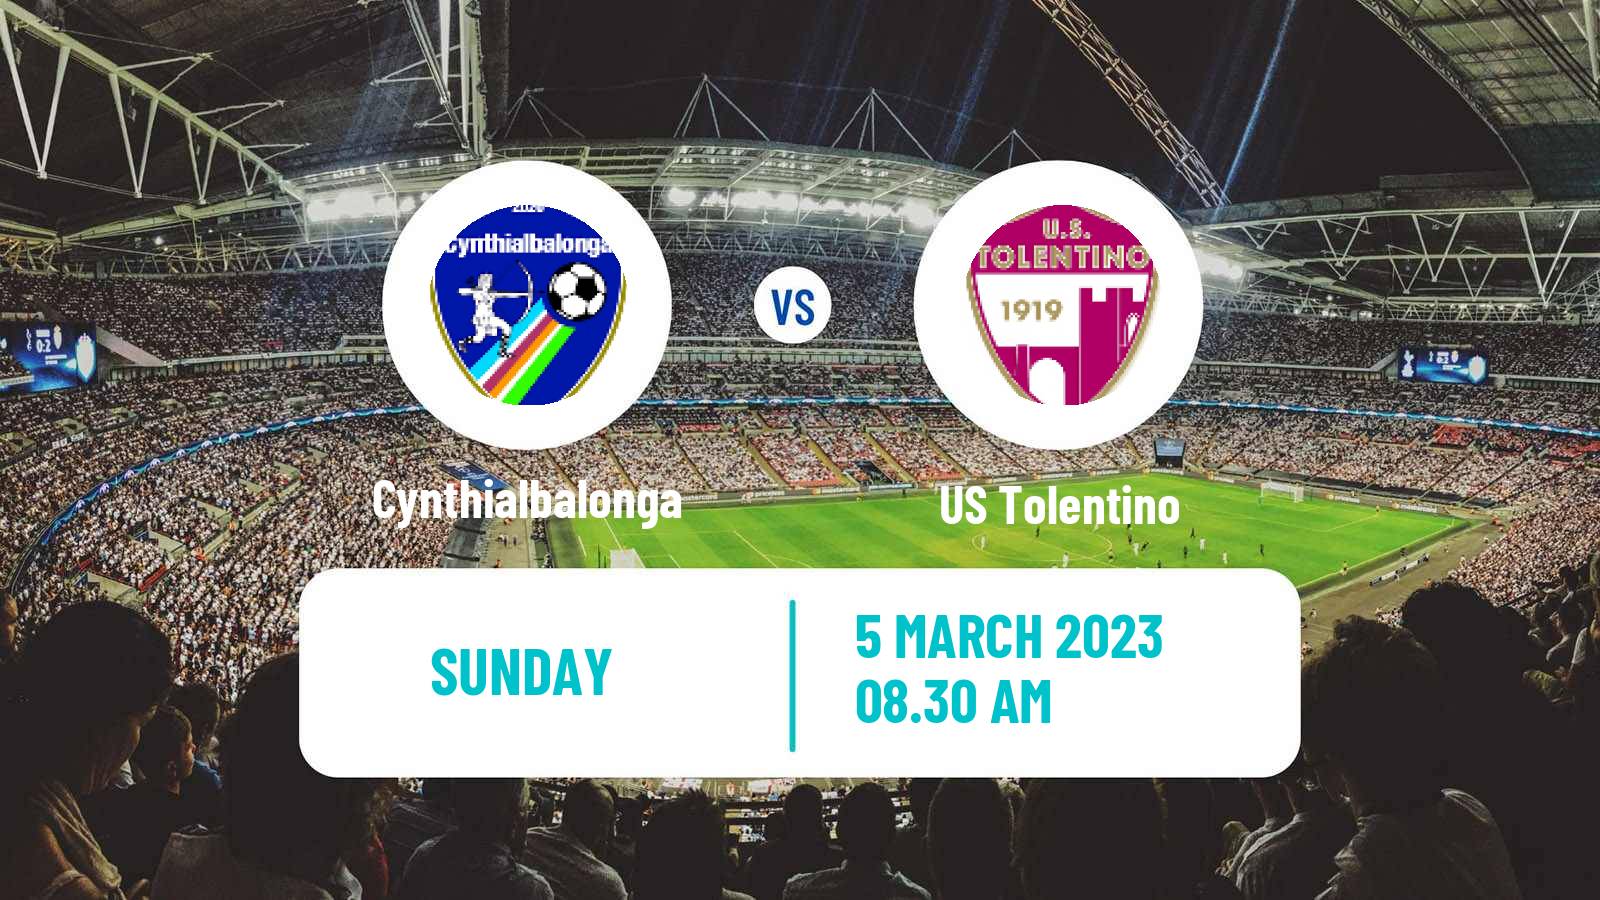 Soccer Italian Serie D - Group F Cynthialbalonga - Tolentino